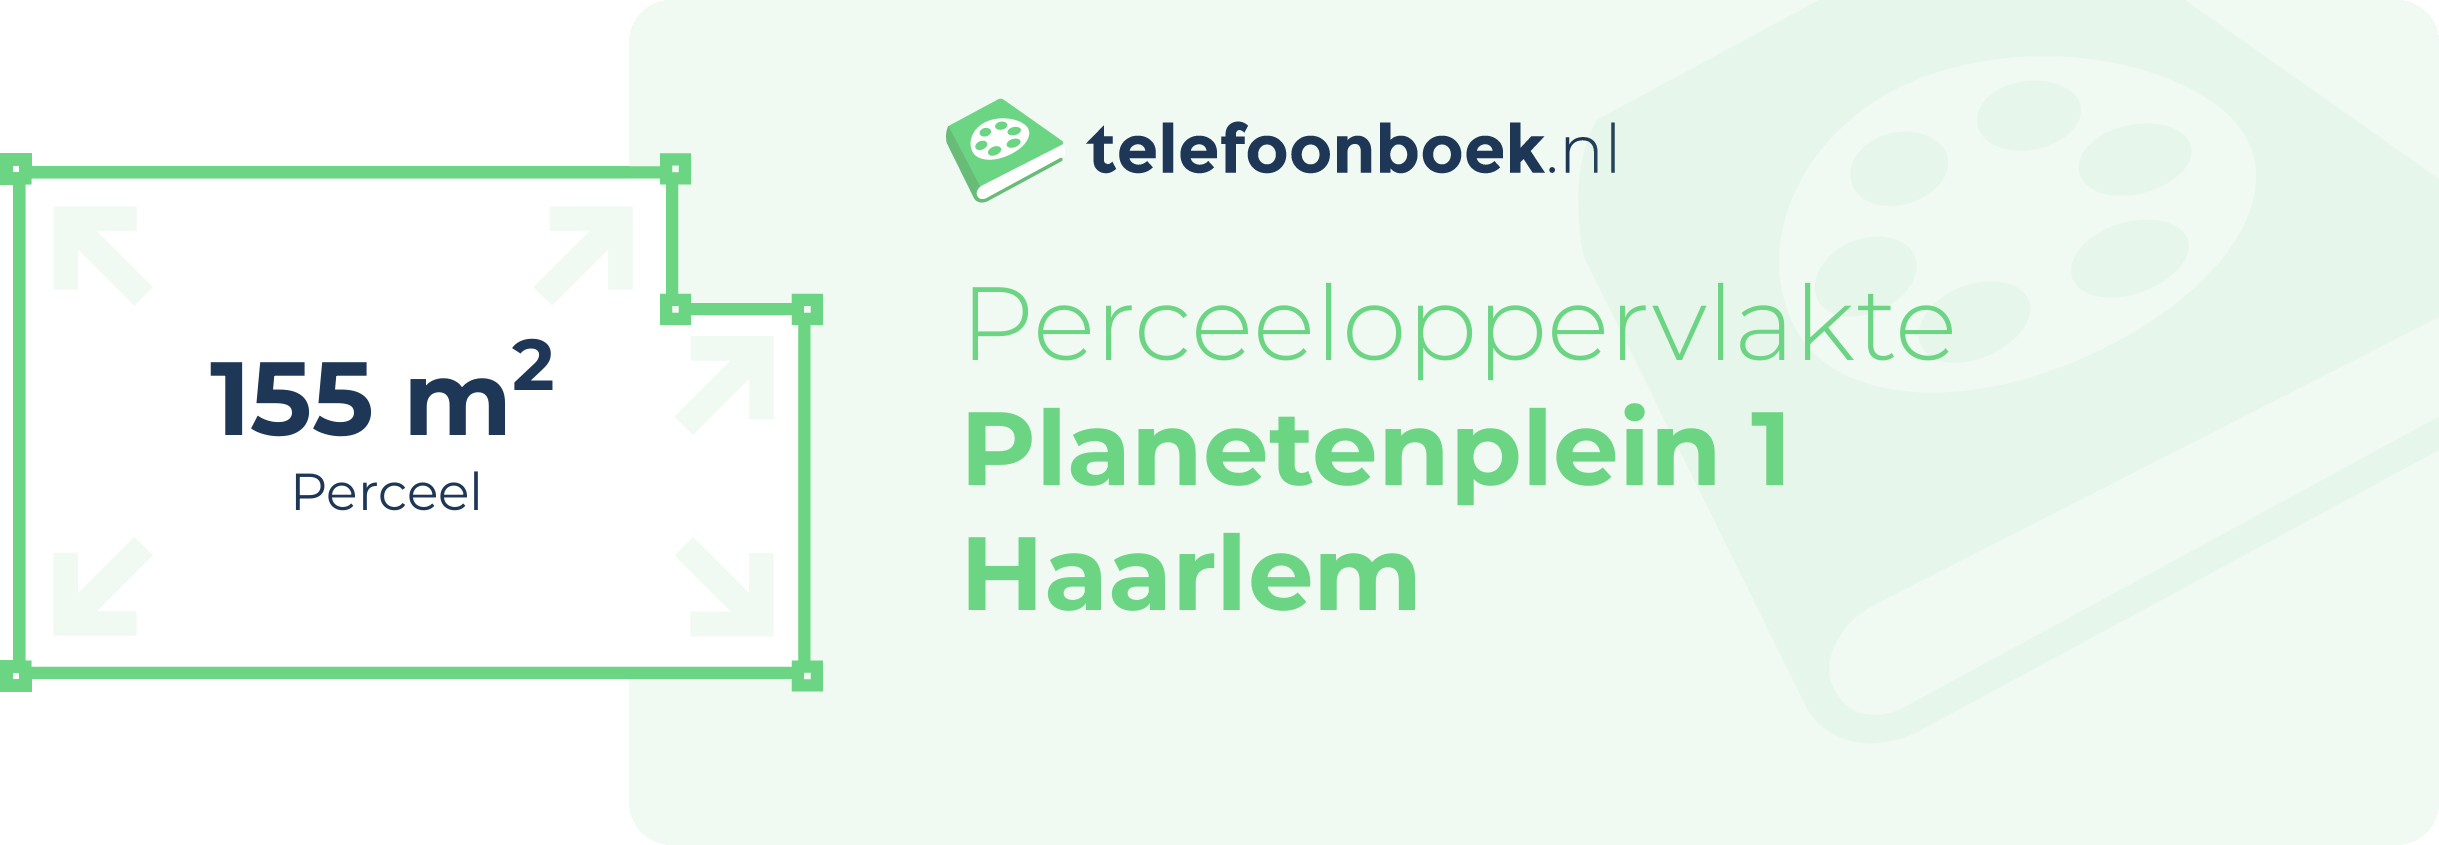 Perceeloppervlakte Planetenplein 1 Haarlem